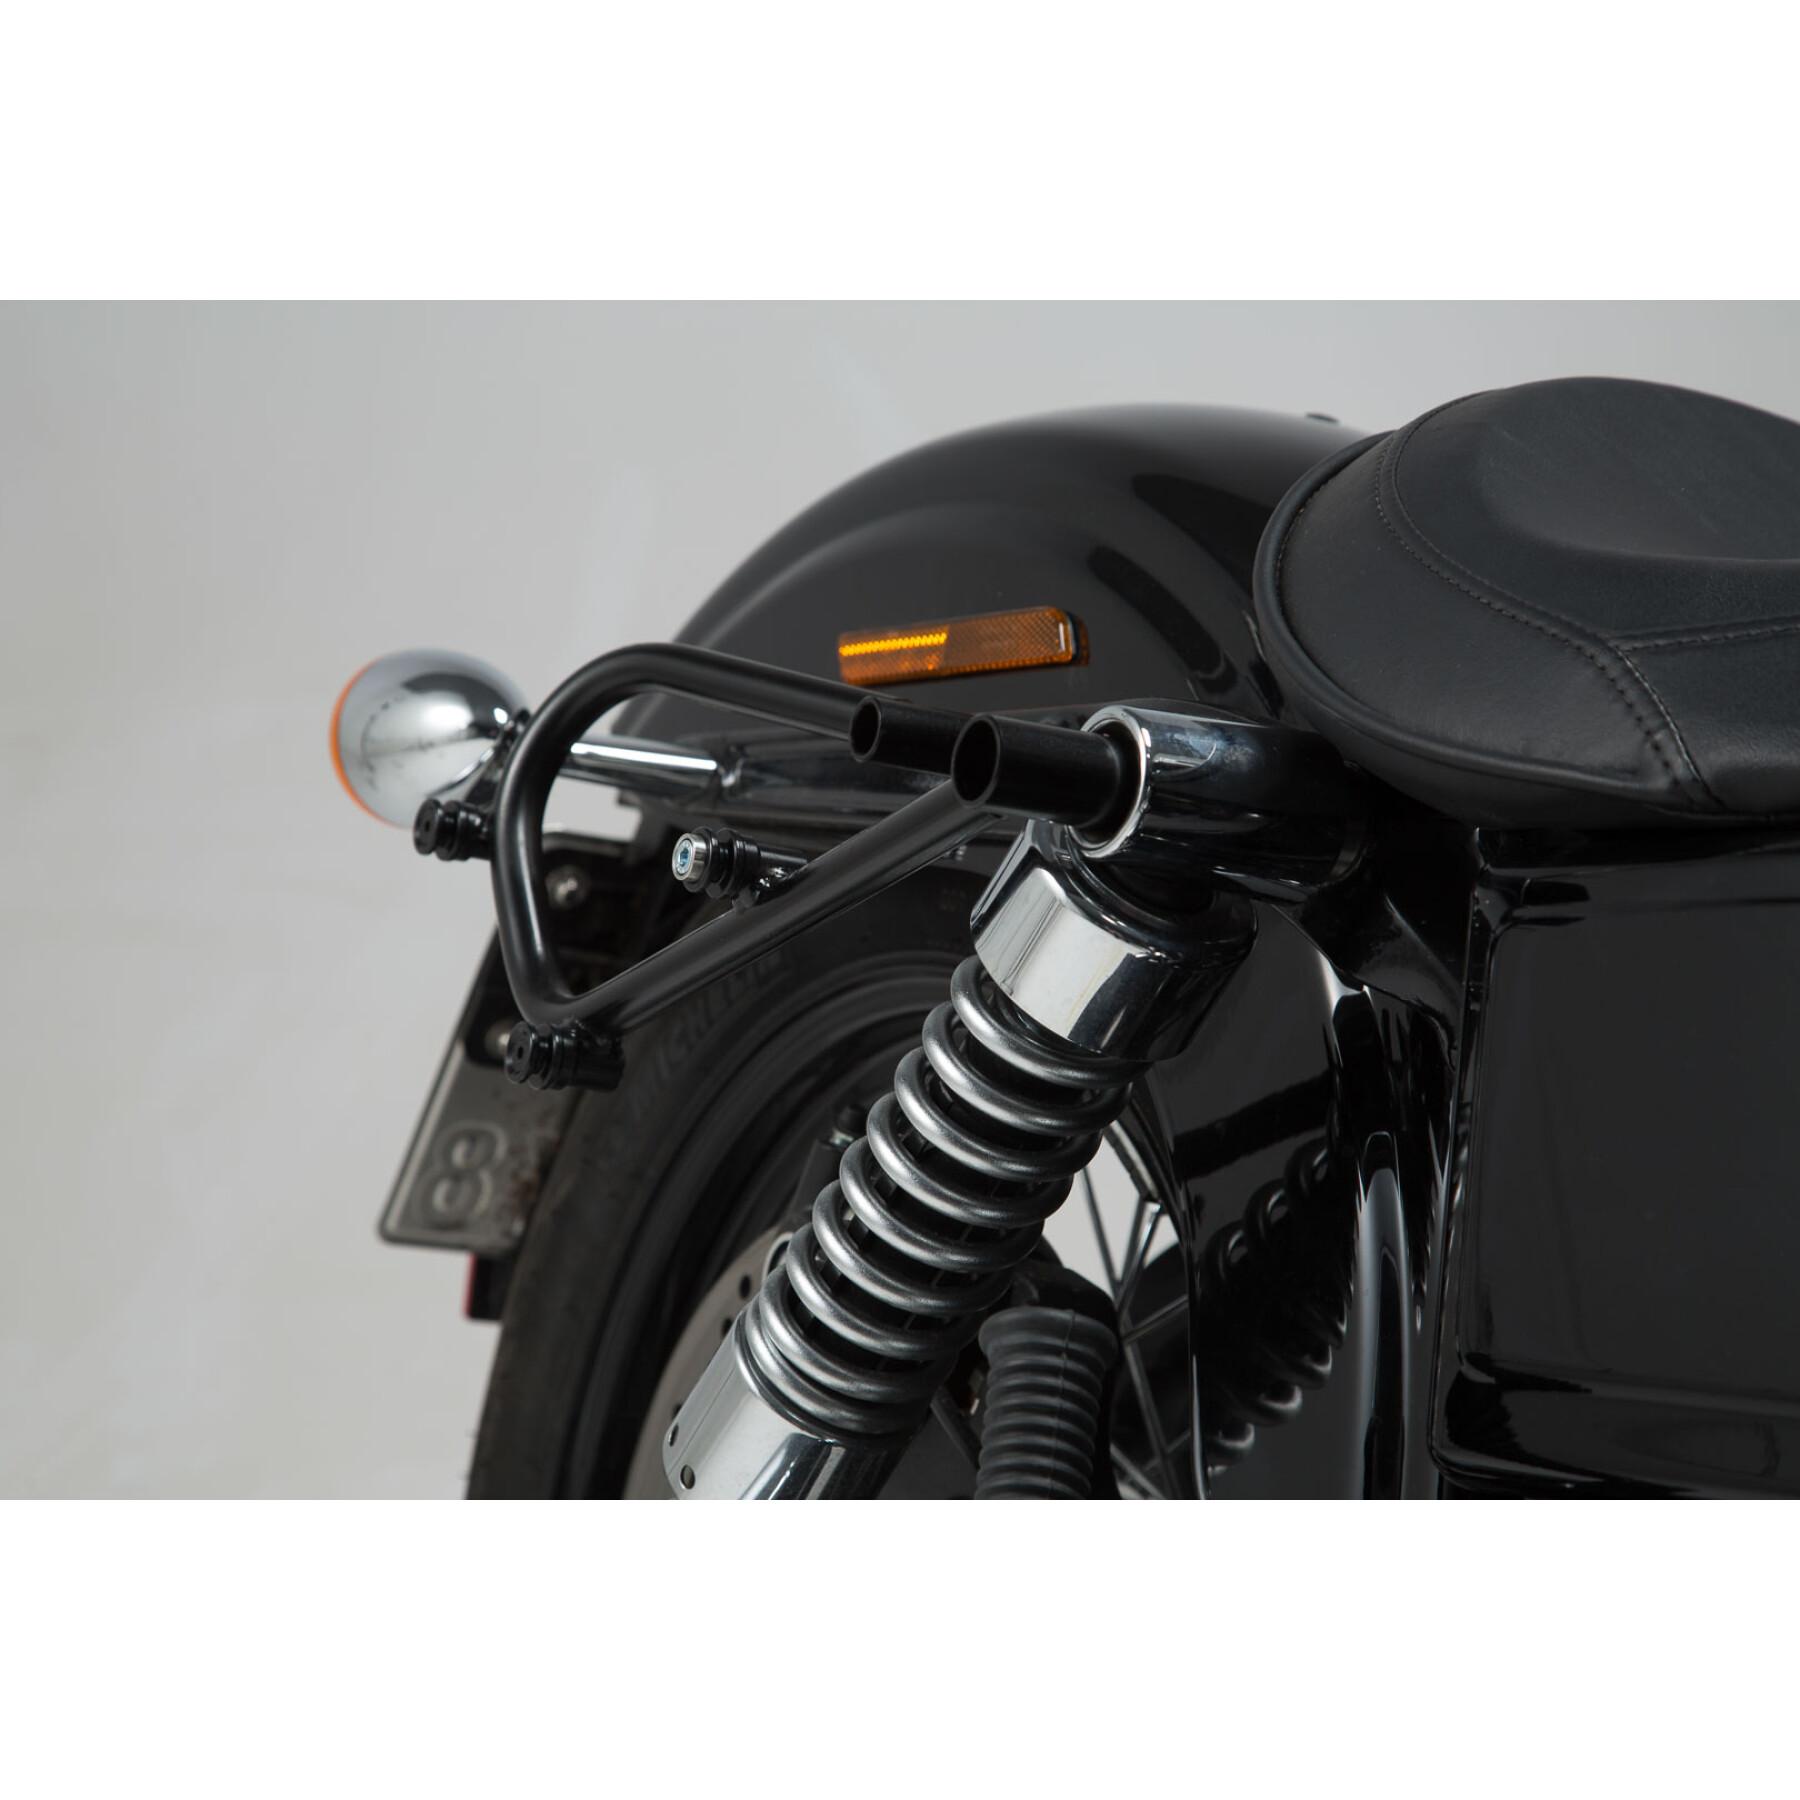 Motorcycle side bag holder slc SW-Motech Harley Dyna modèles (09-17).